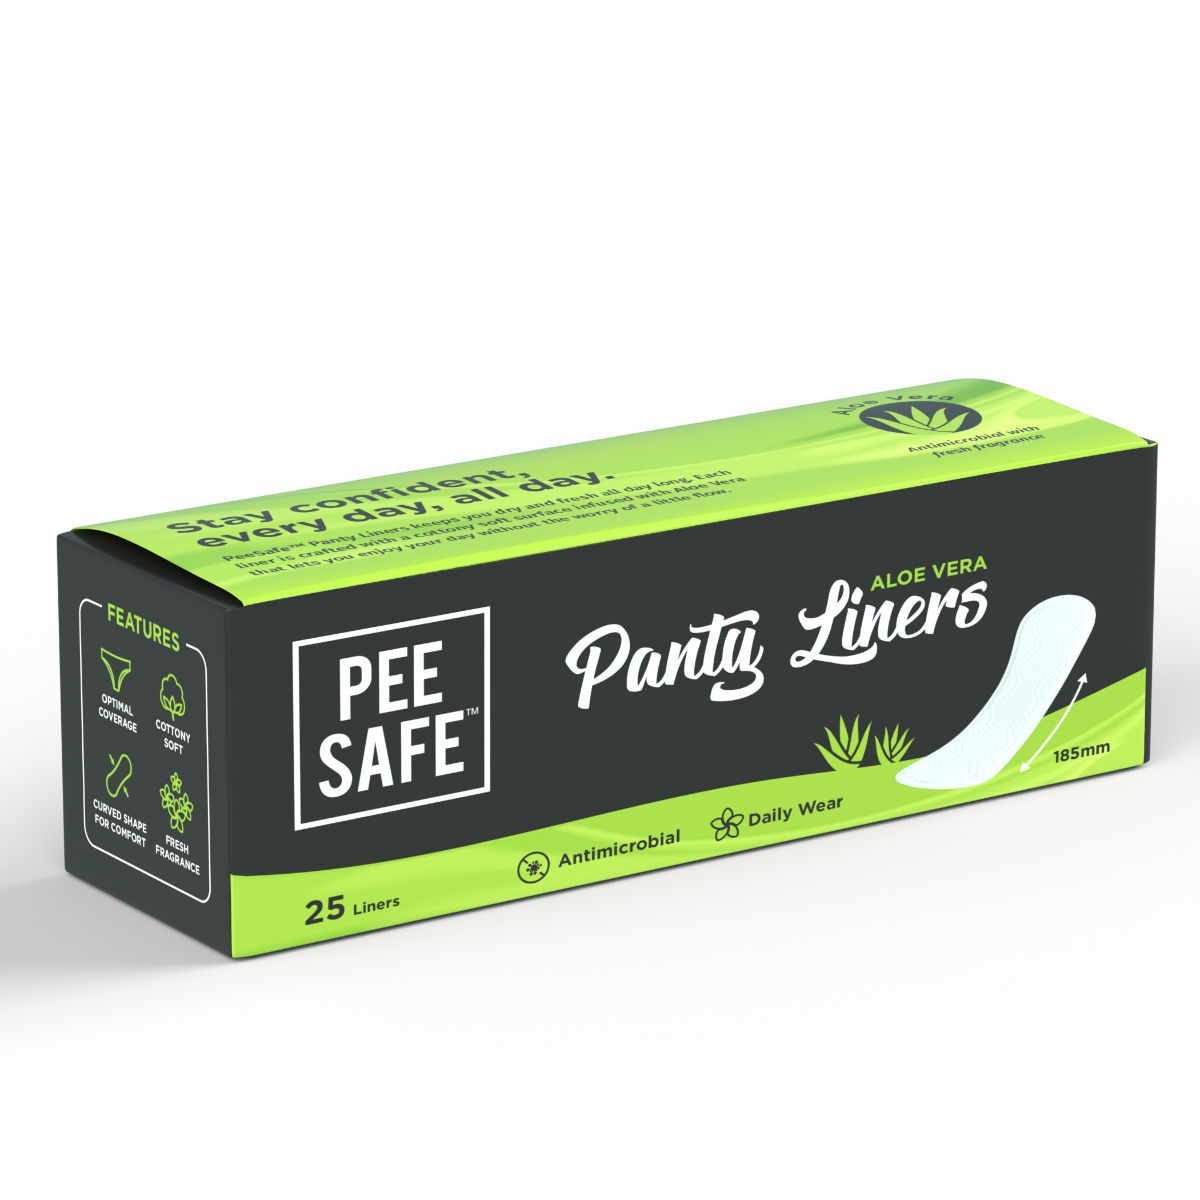 Buy Pee Safe Aloe Vera Panty Liners, 25 Count Online